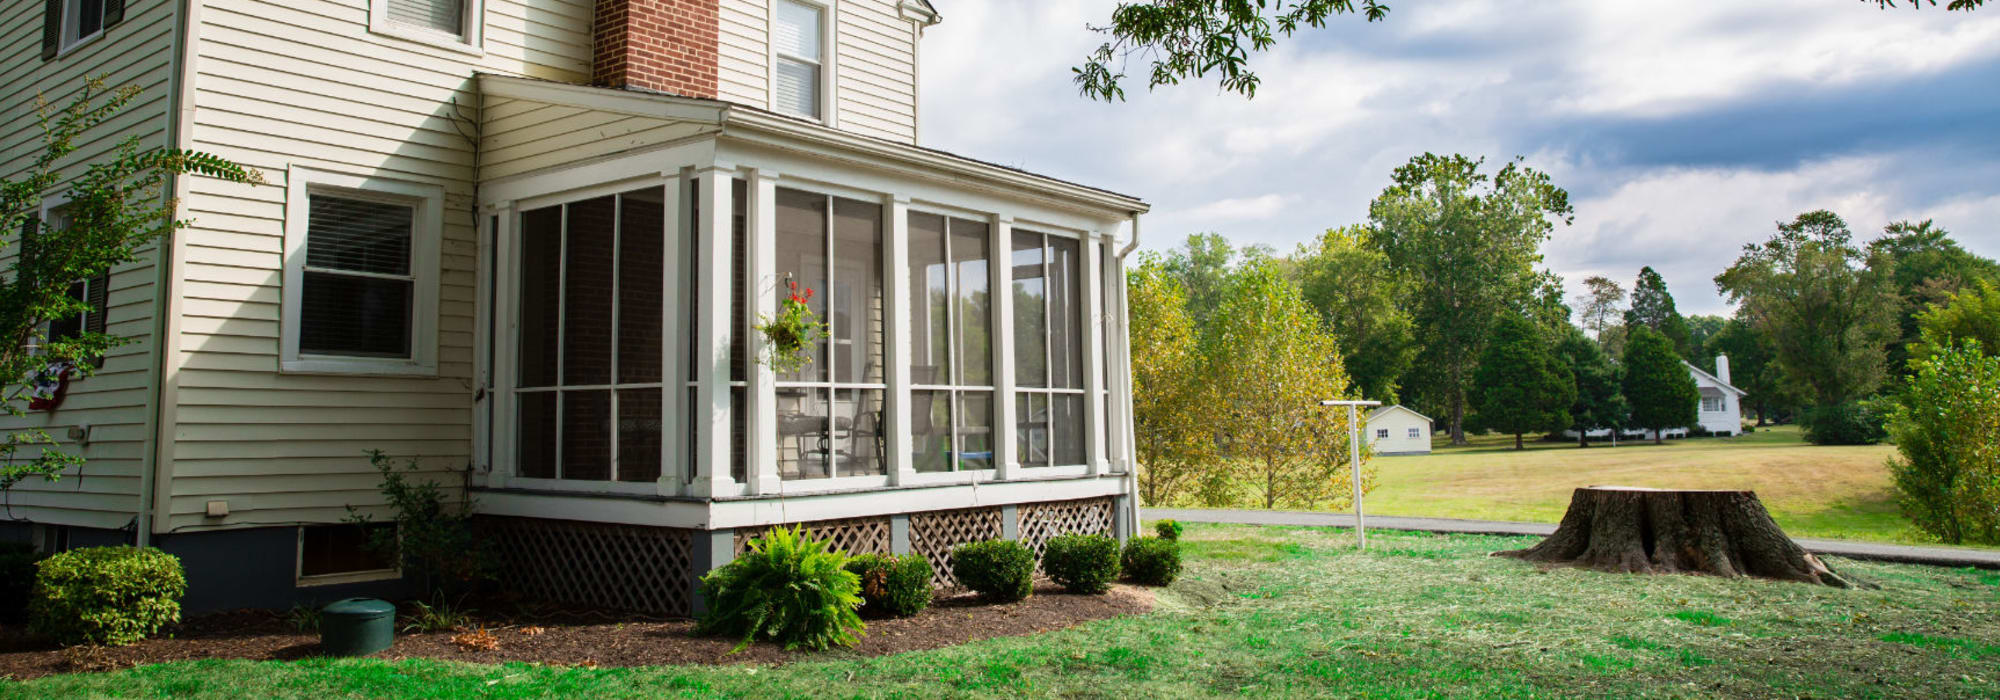 Home with enclosed porch at Dahlgren (NSF) in Dahlgren, Virginia